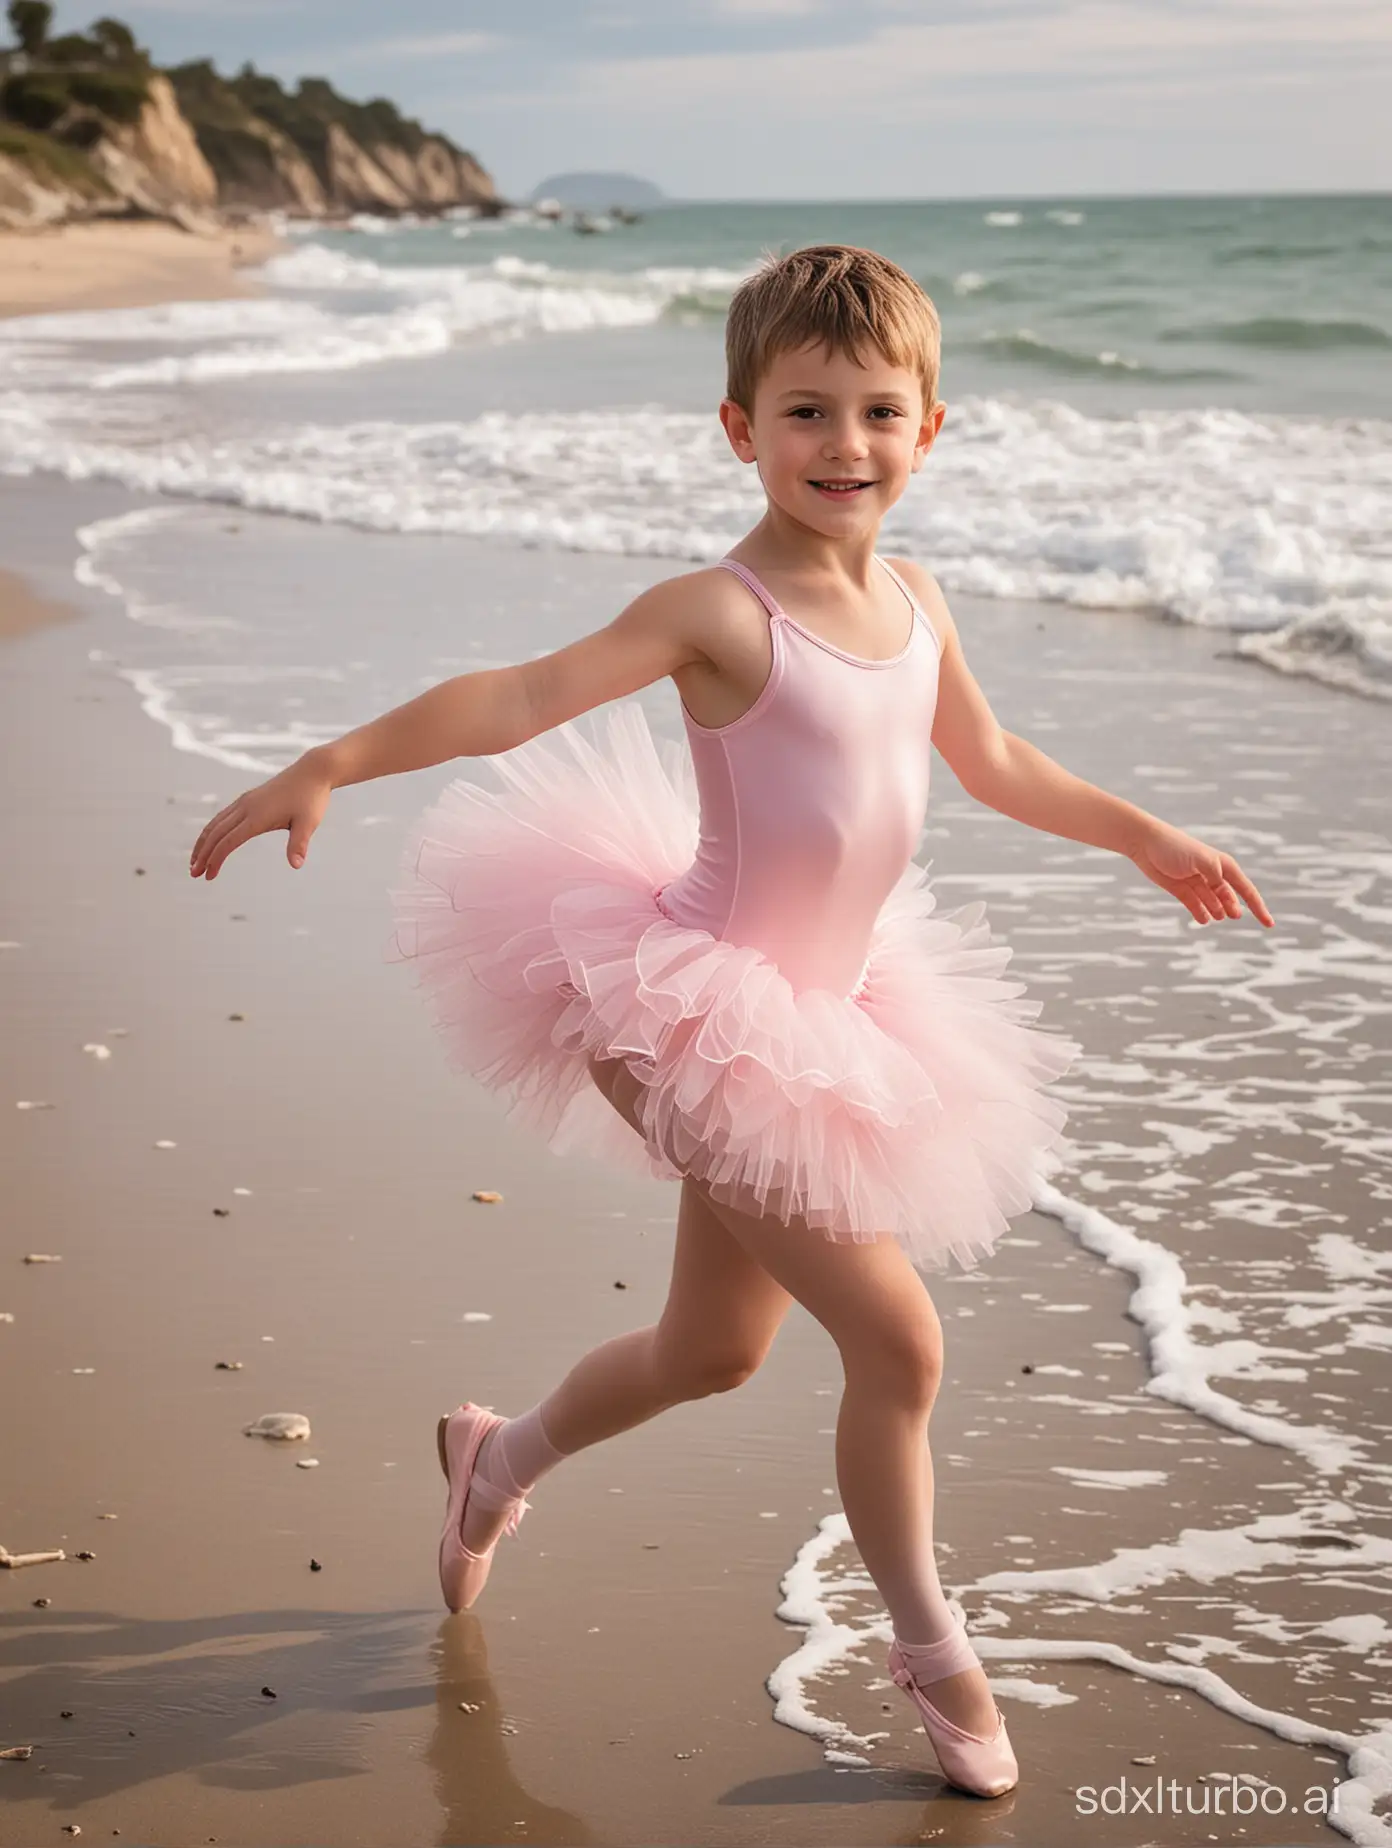 Playful-Boy-in-Pink-Ballerina-Costume-Runs-Along-Beach-Shoreline